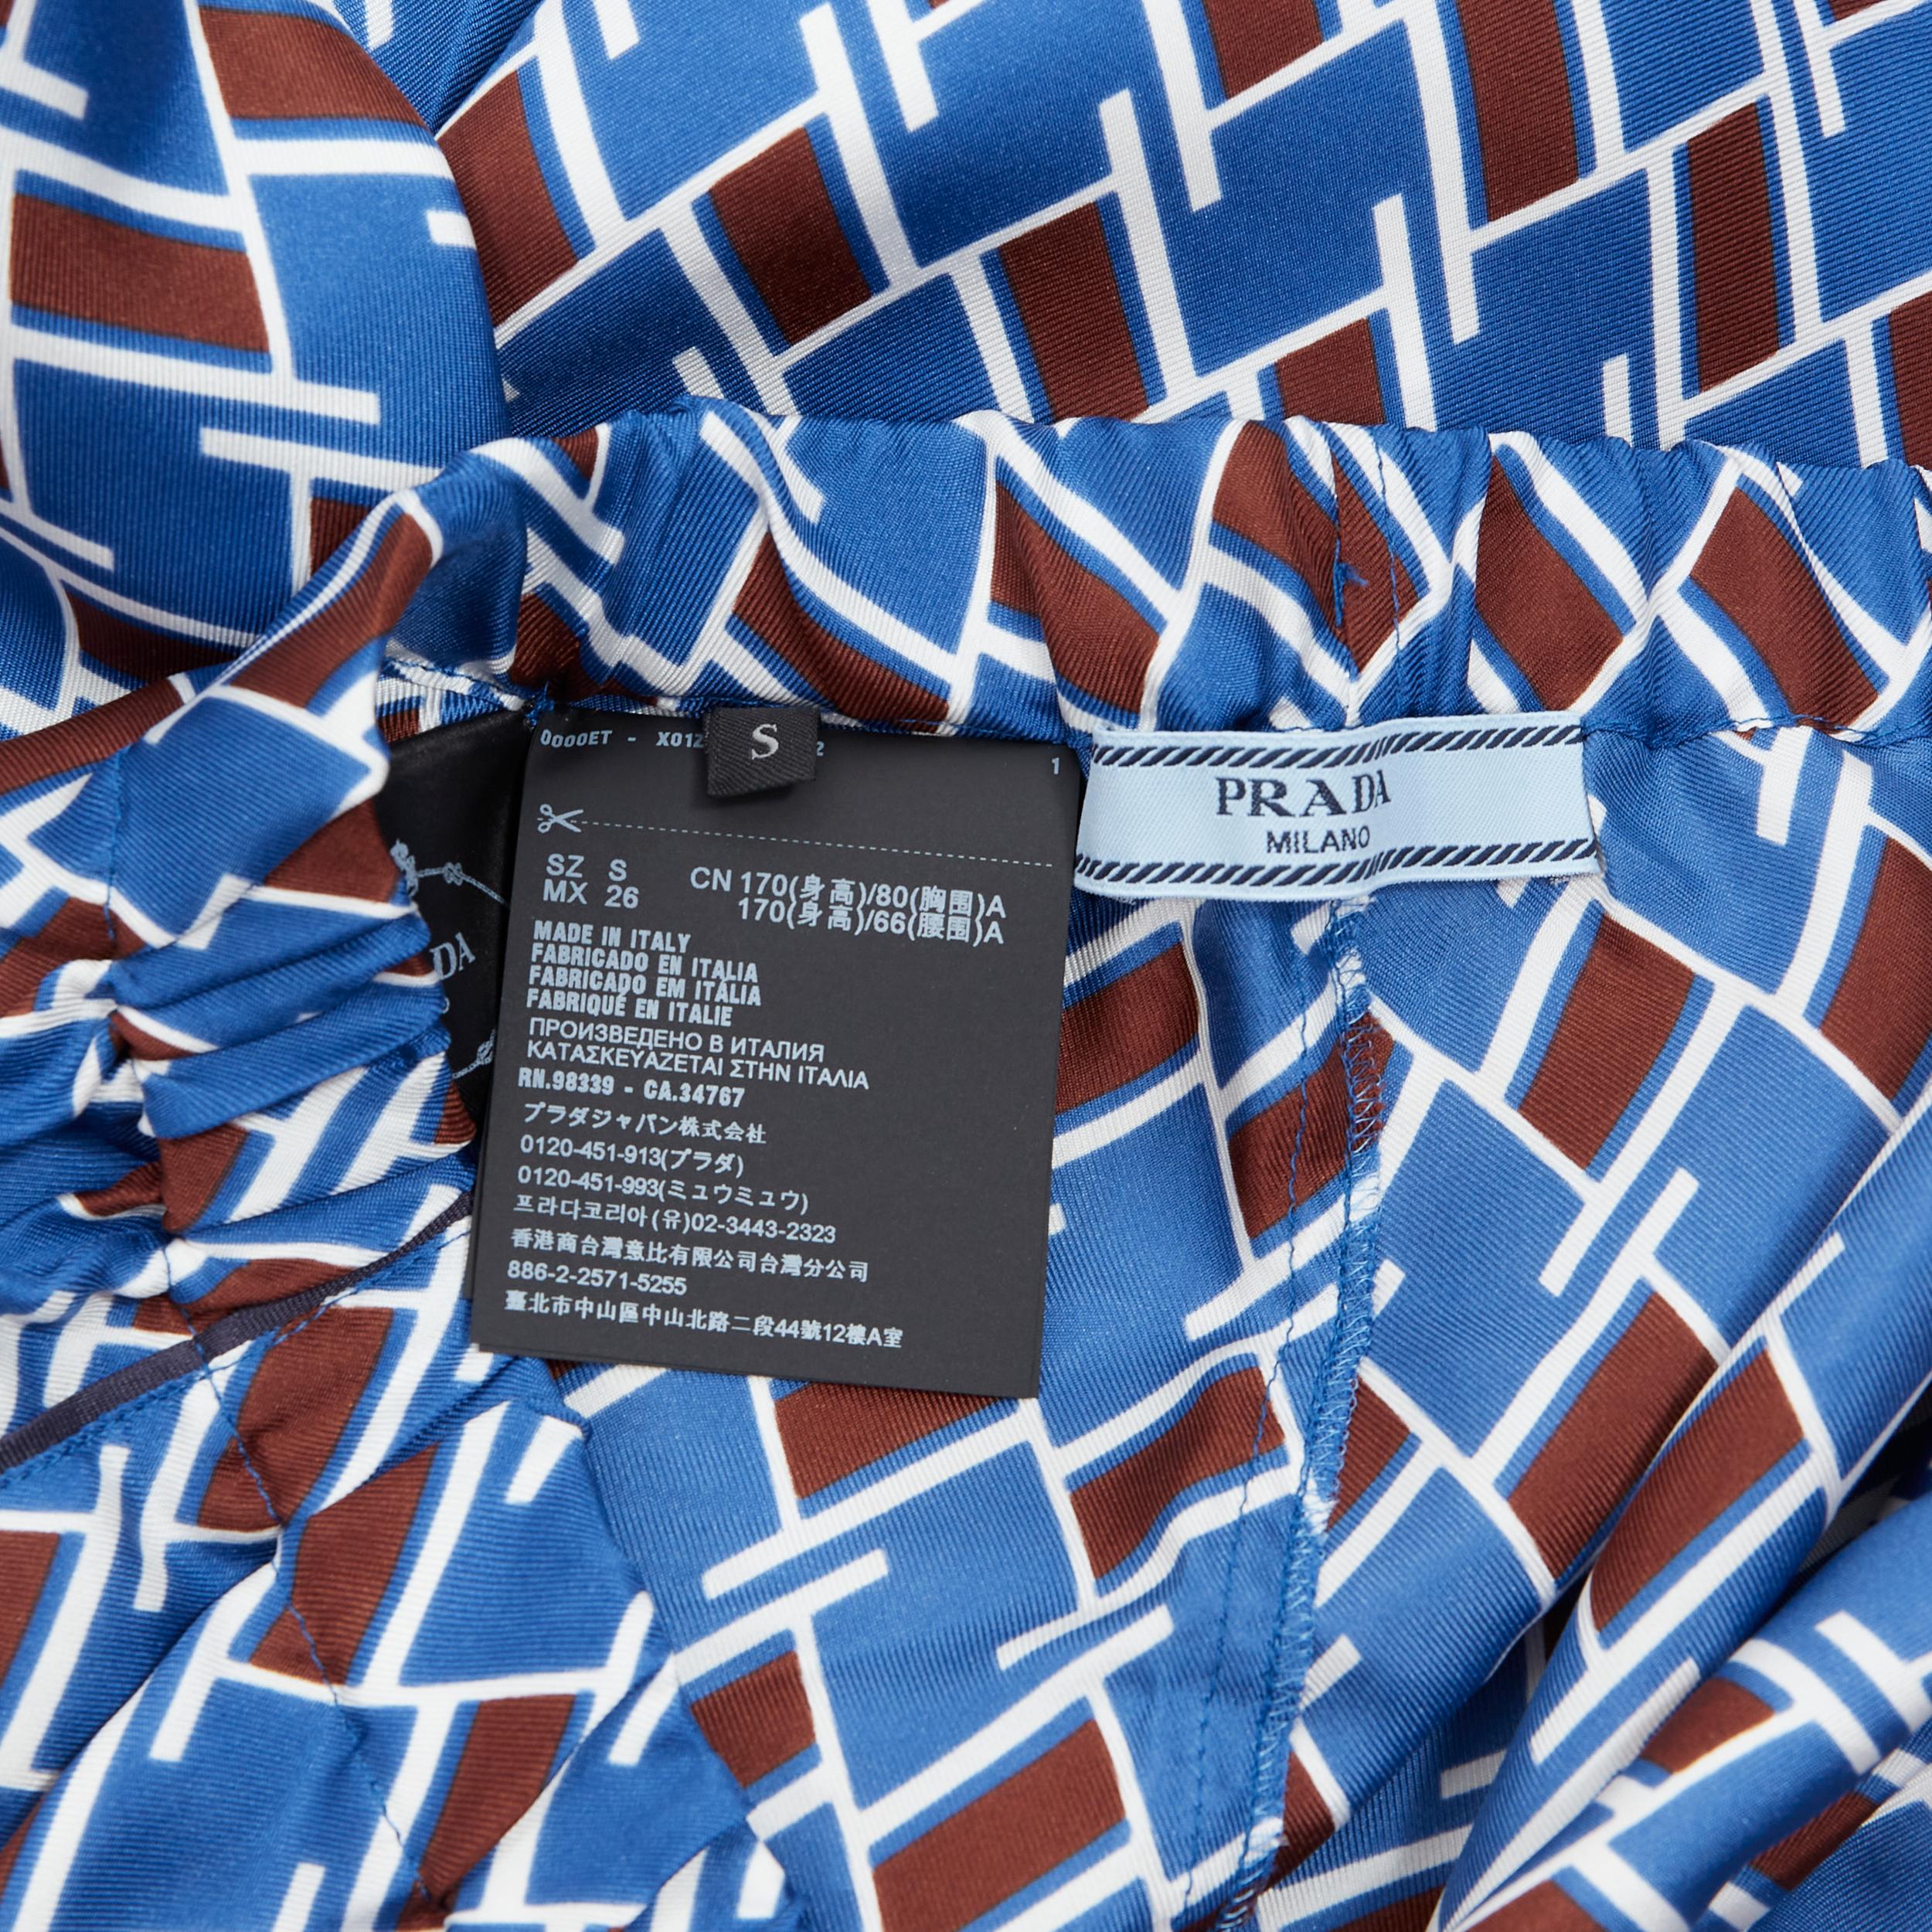 new PRADA 2019 Twist Swirl Geometric blue chevron print 100% silk pyjama pants S 3